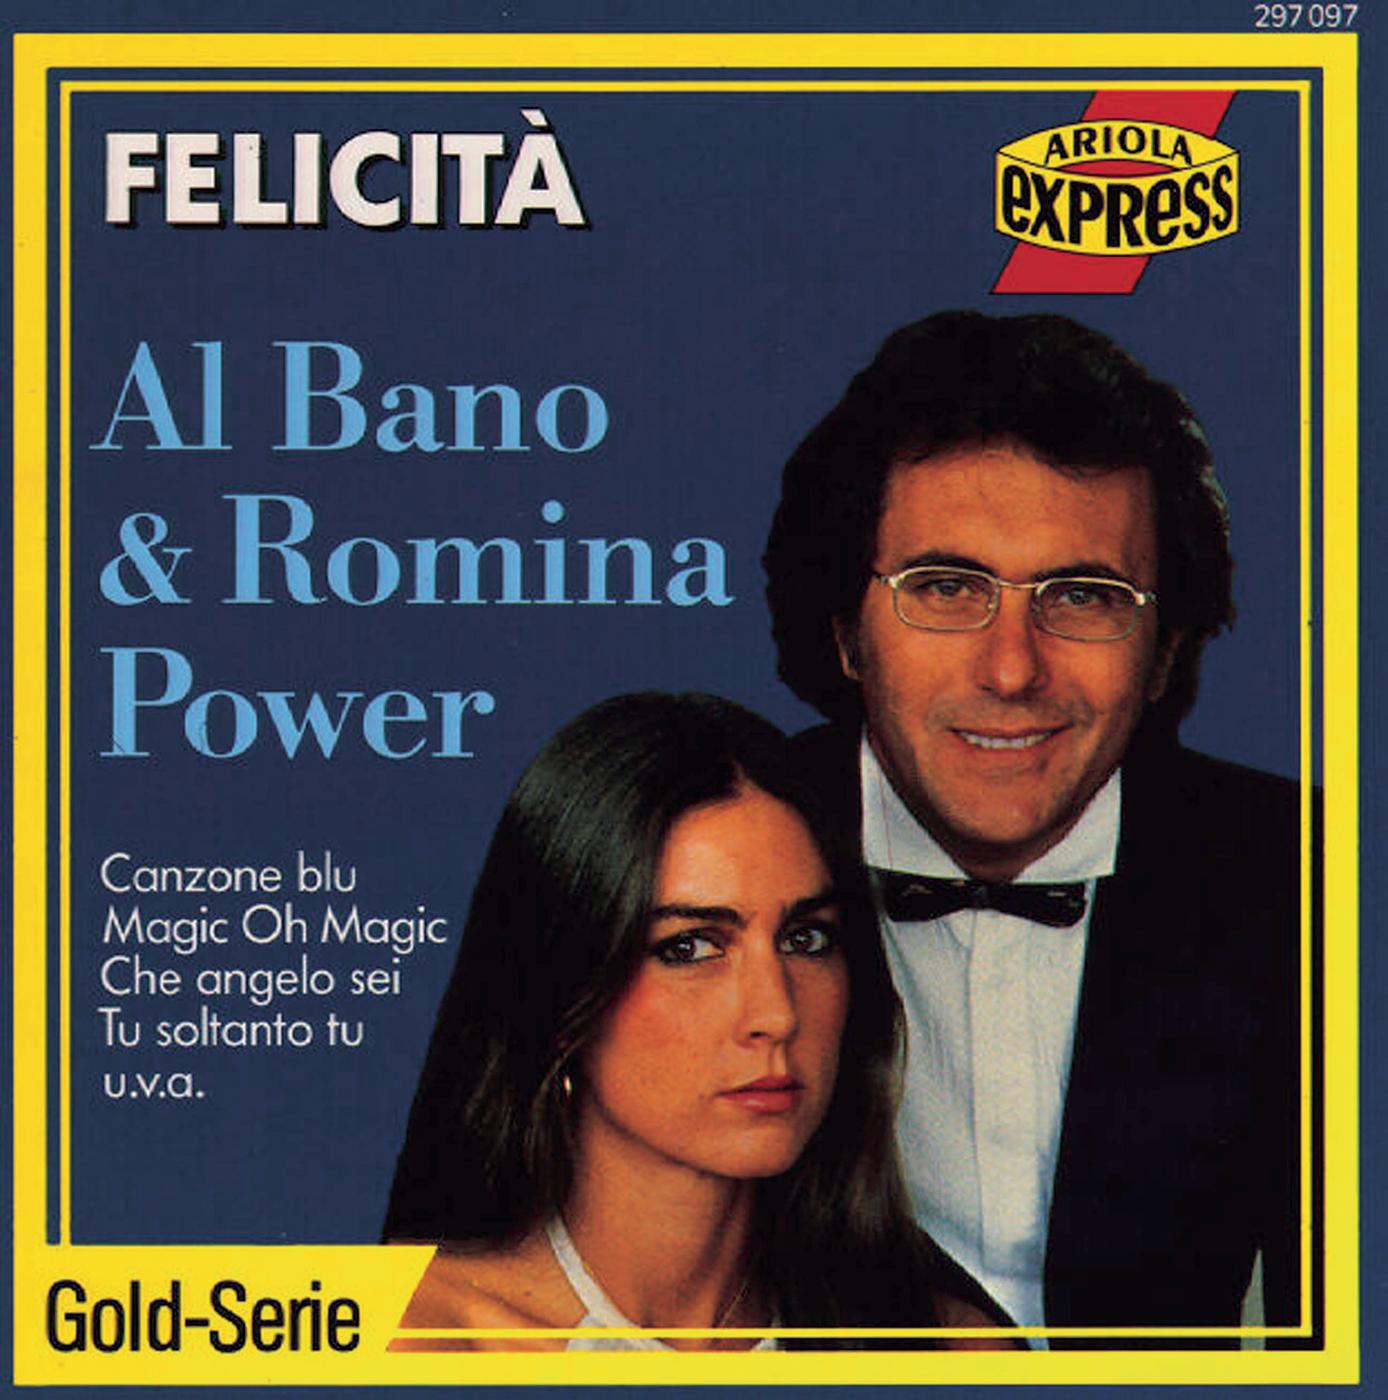 Al bano romina power felicita. Felicita Аль Бано и Ромина Пауэр 1982. Al bano & Romina Power Felicitá. Al bano Romina Power обложка. Al bano and Romina Power (2 CD).